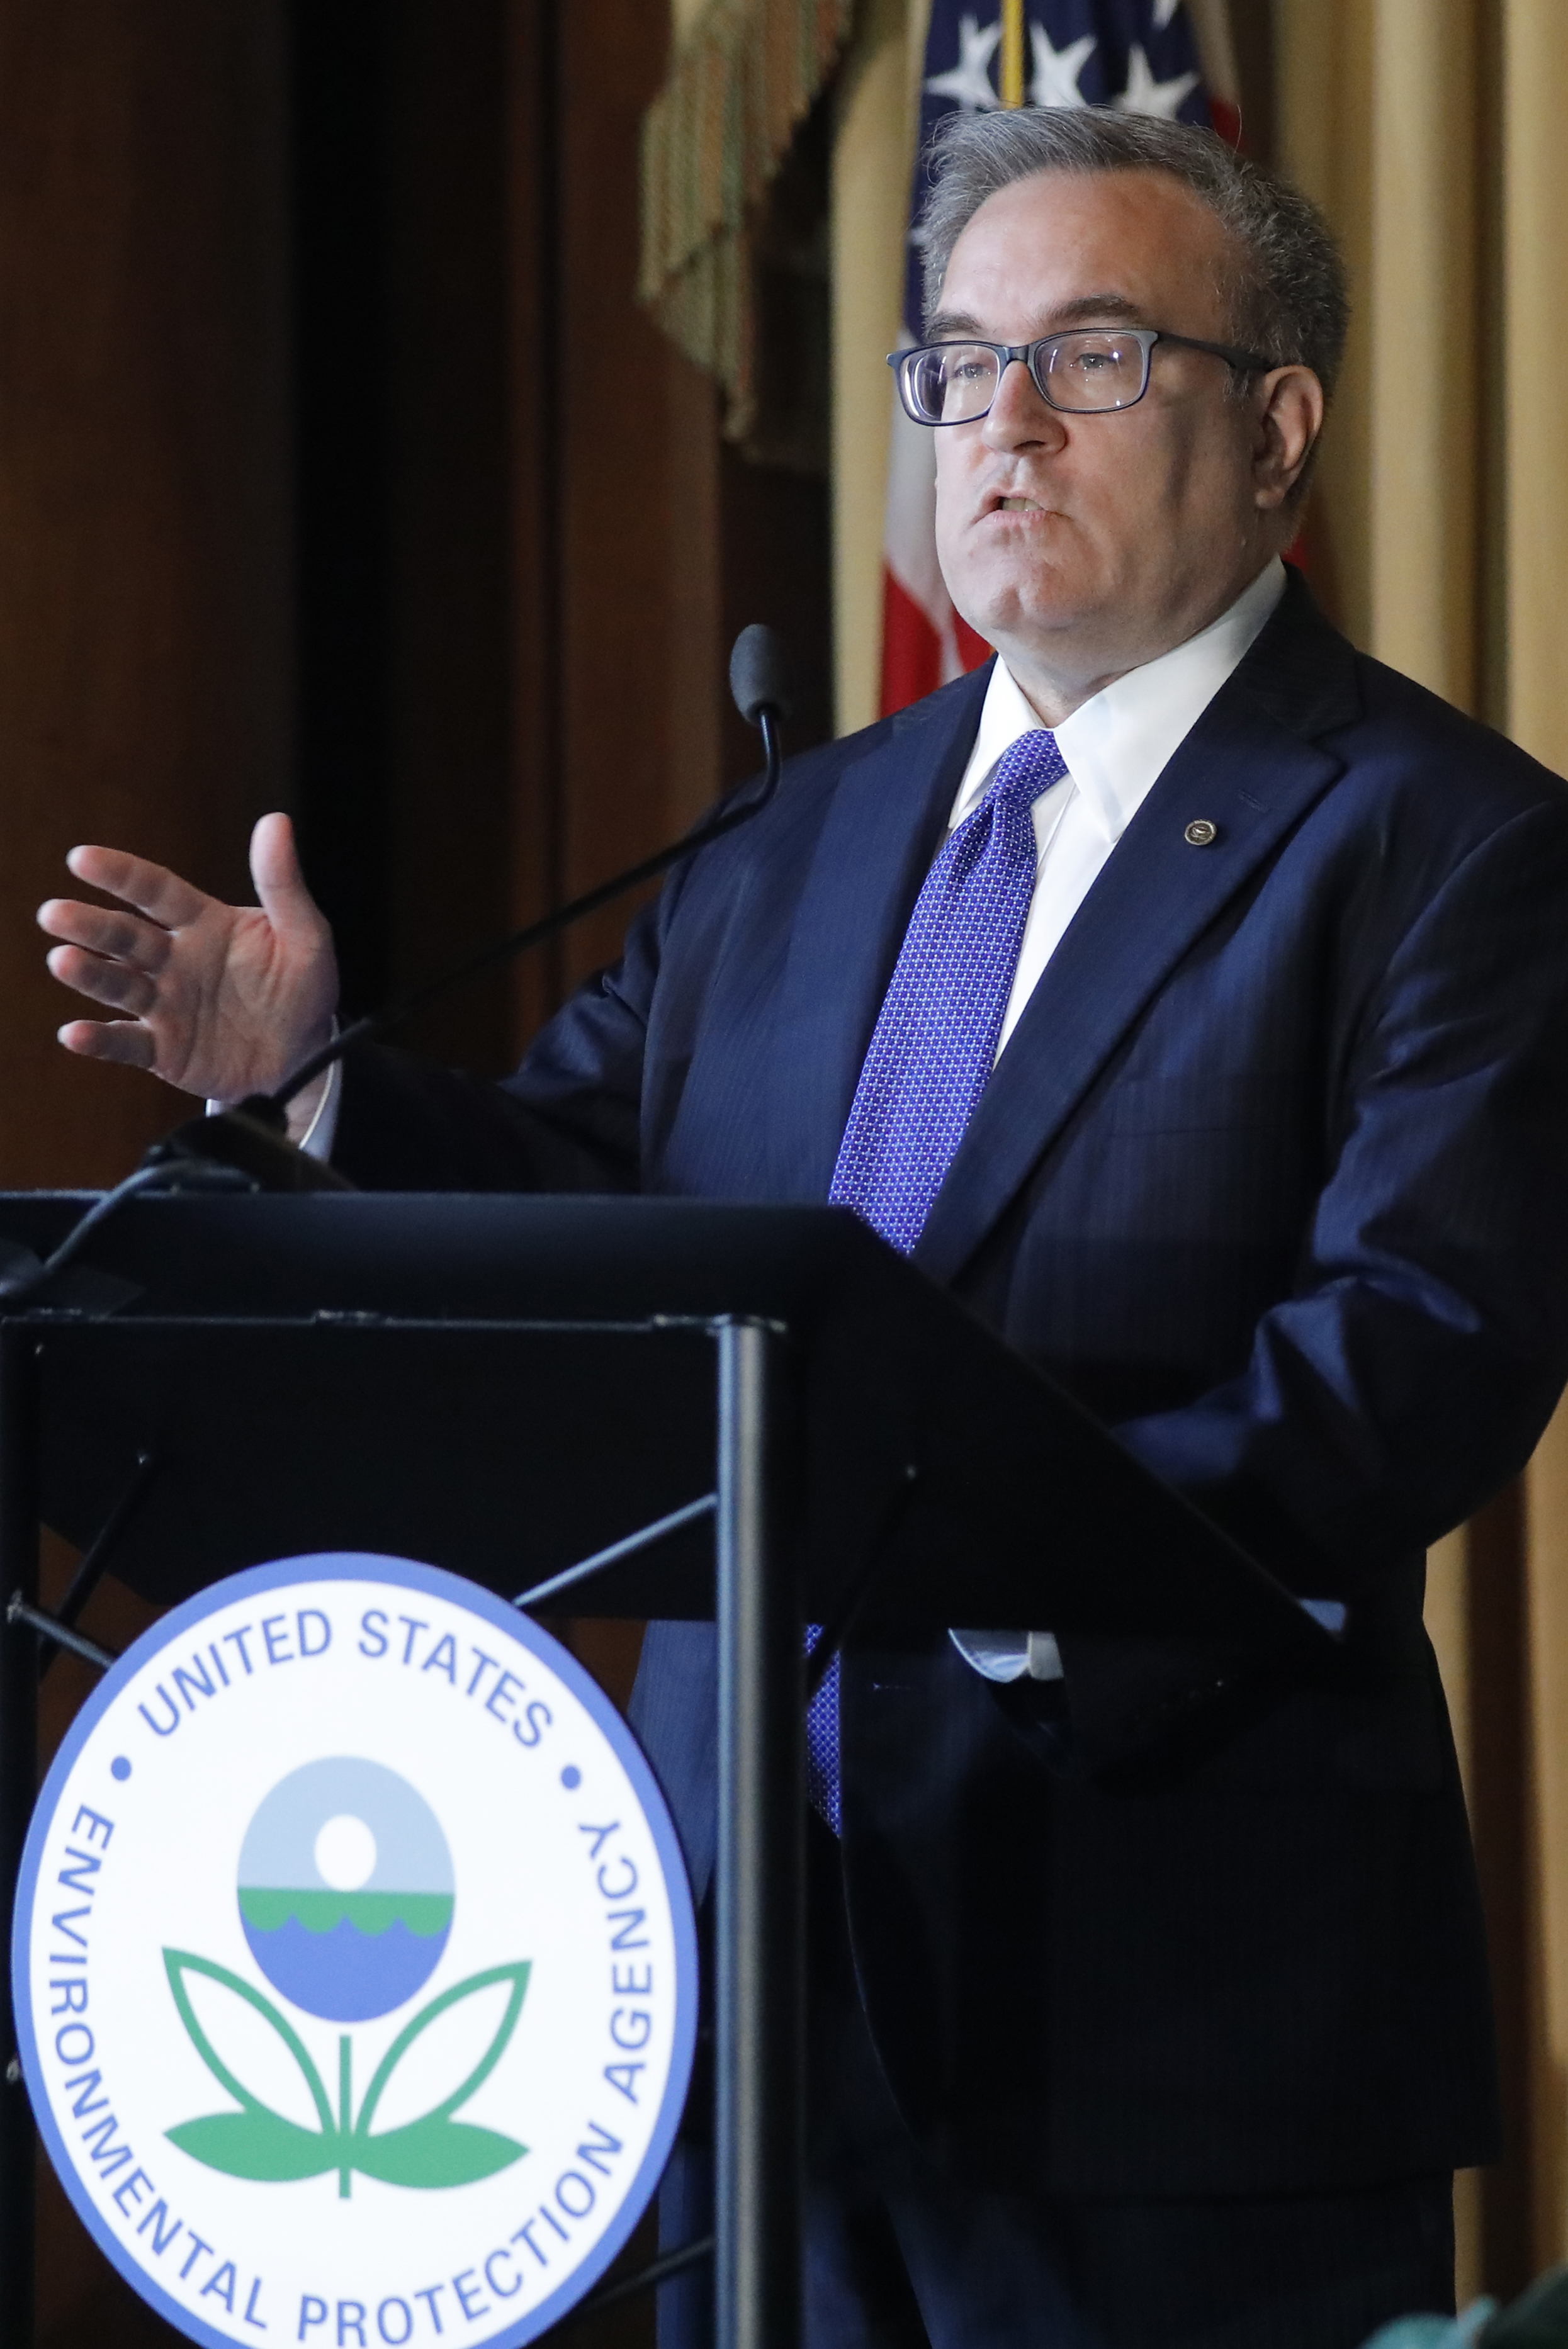 U.S. Environmental Protection Agency (EPA) Acting Administrator Andrew Wheeler addresses EPA staff at EPA headquarters in Washington, U.S., July 11, 2018. REUTERS/Ting Shen